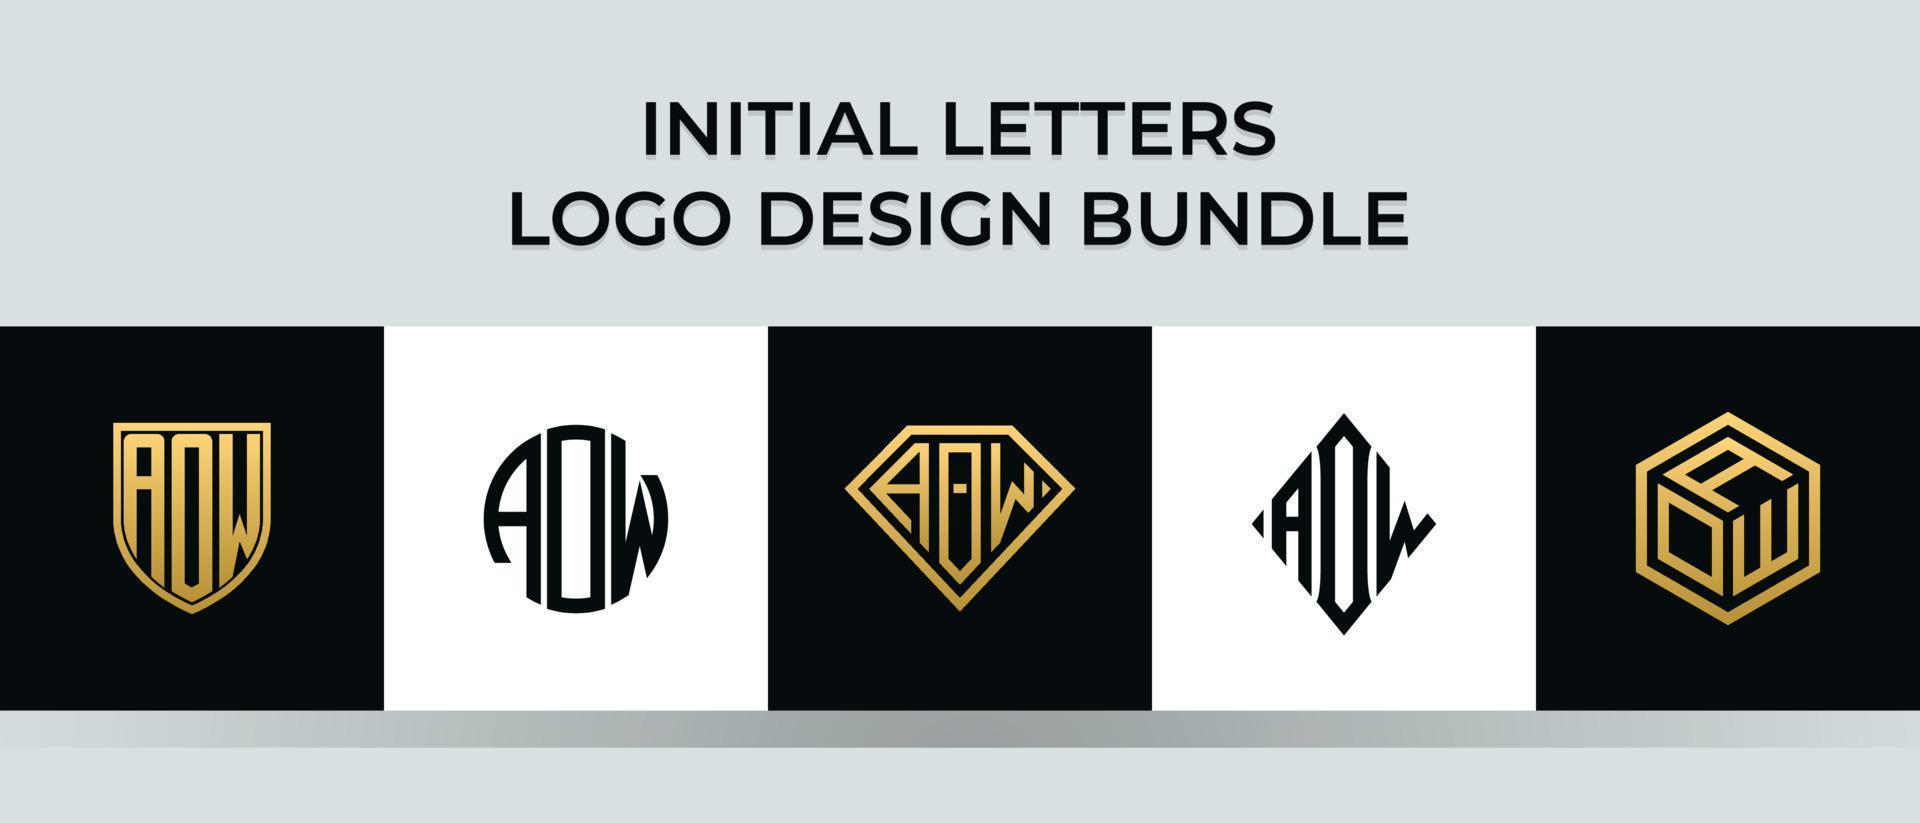 Initial letters AOW logo designs Bundle vector